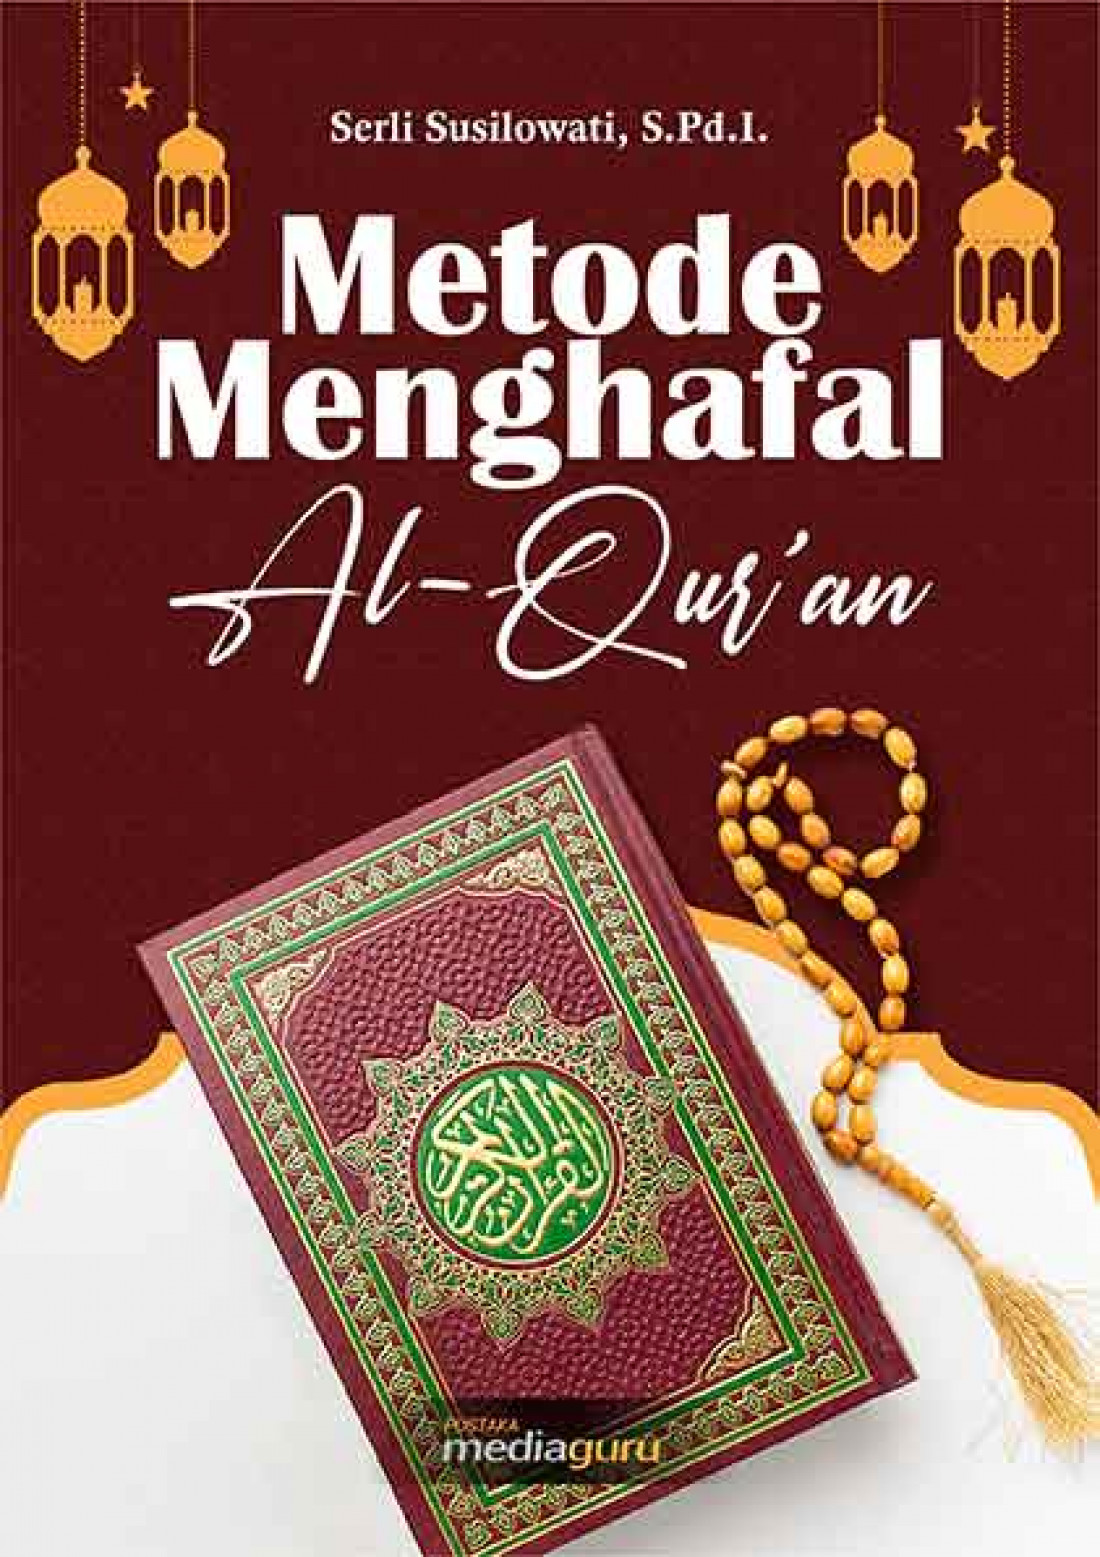 Metode Menghafal Al-Qur’an